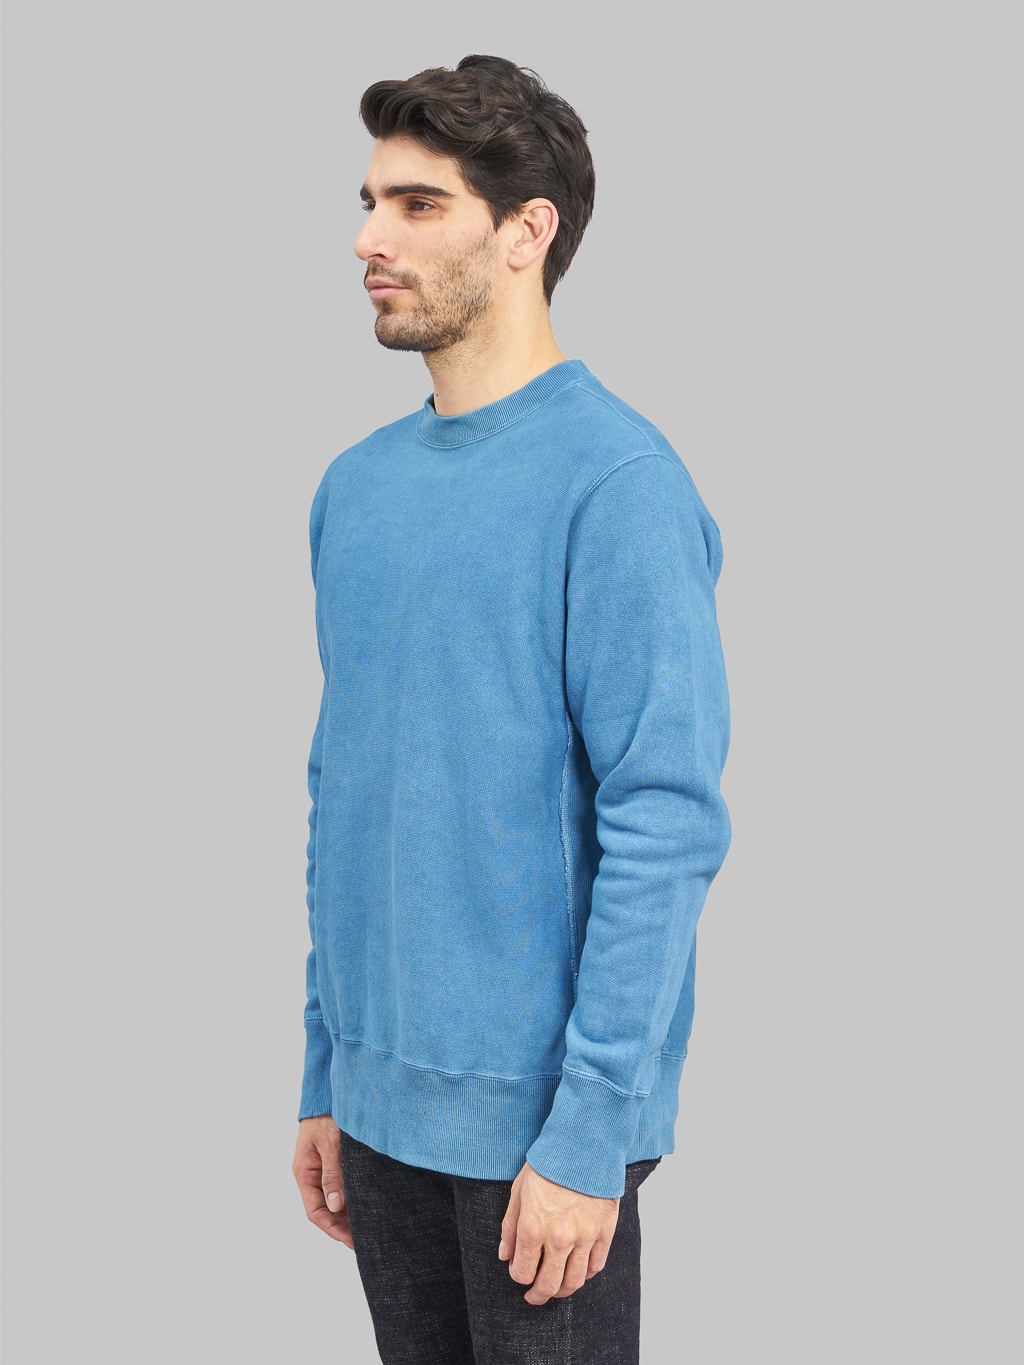 Studio D'Artisan 8122  "AWA-AI" Natural Indigo Reverse Weave Sweatshirt